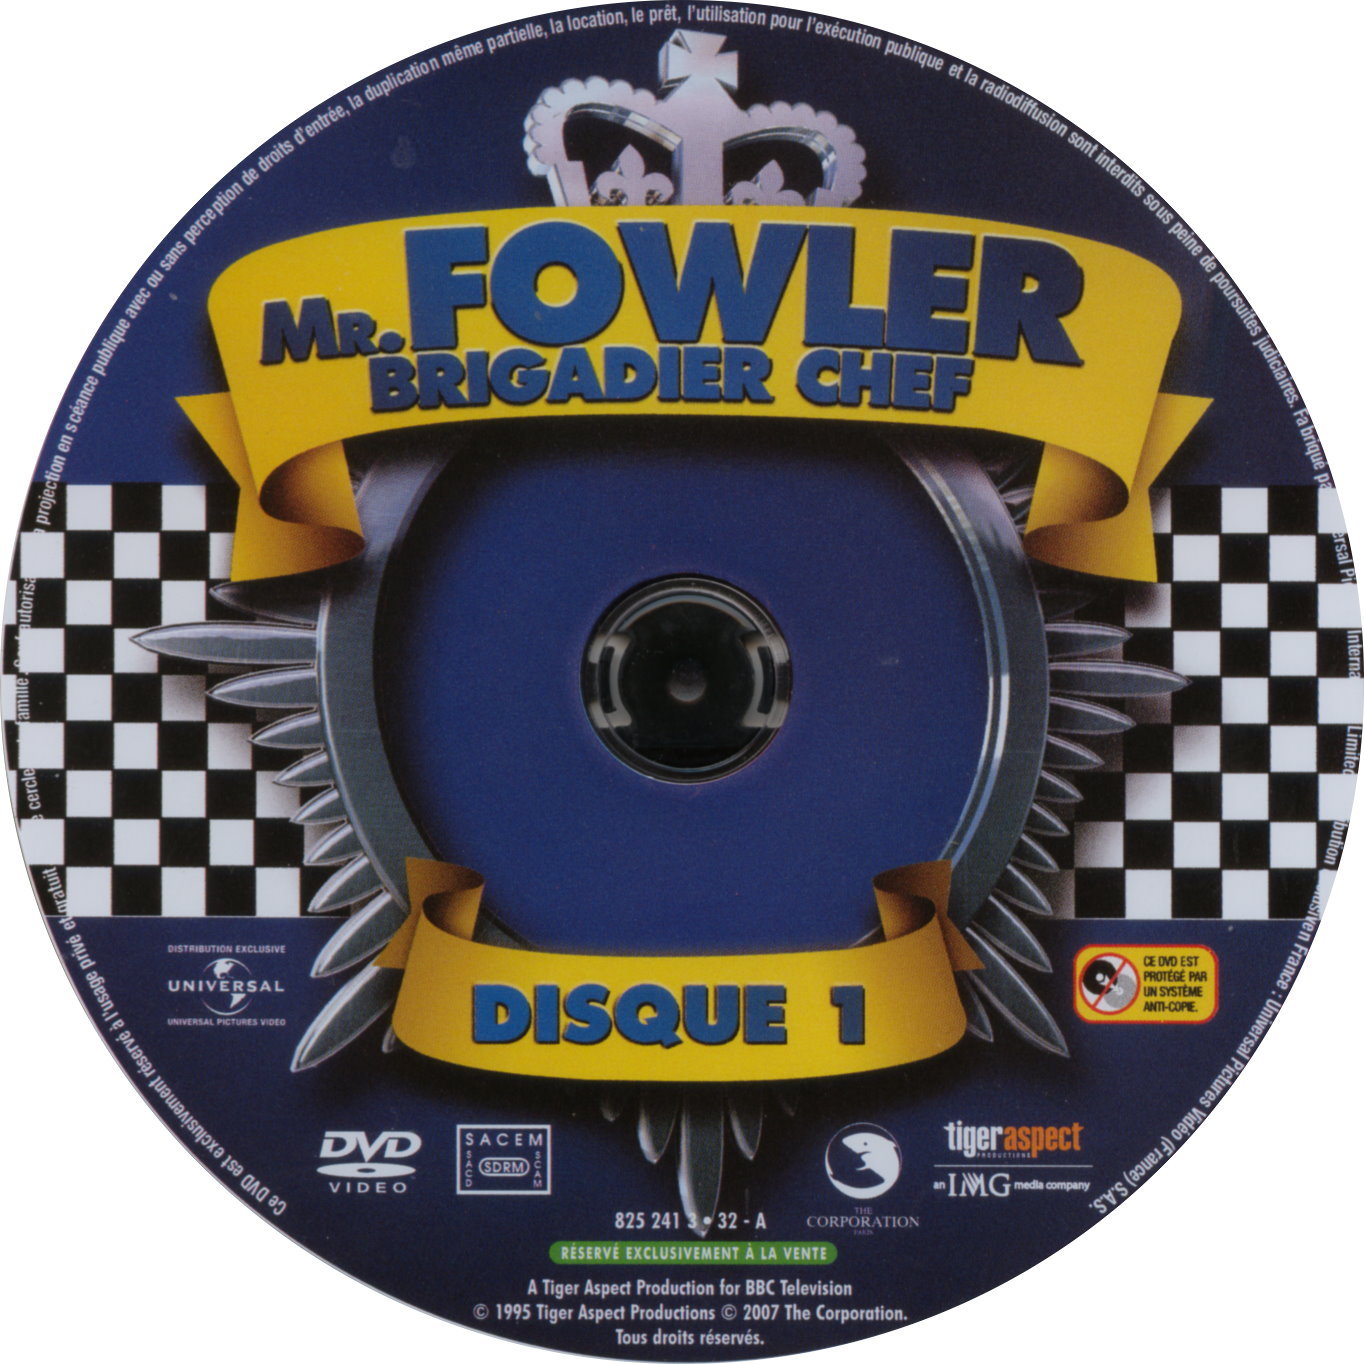 Mr Fowler brigadier chef DVD 3